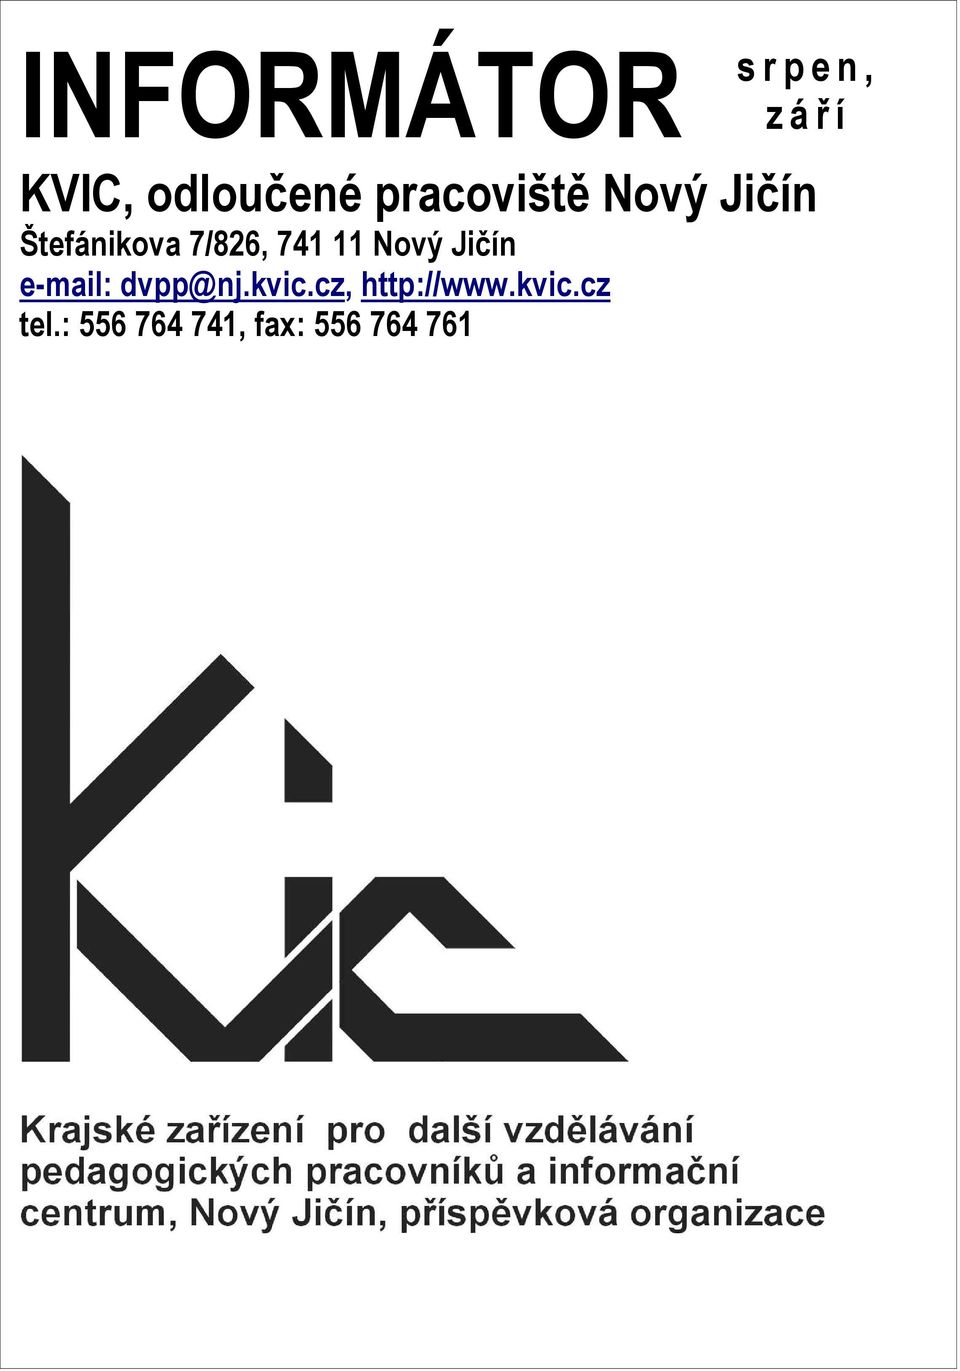 dvpp@nj.kvic.cz, http://www.kvic.cz tel.